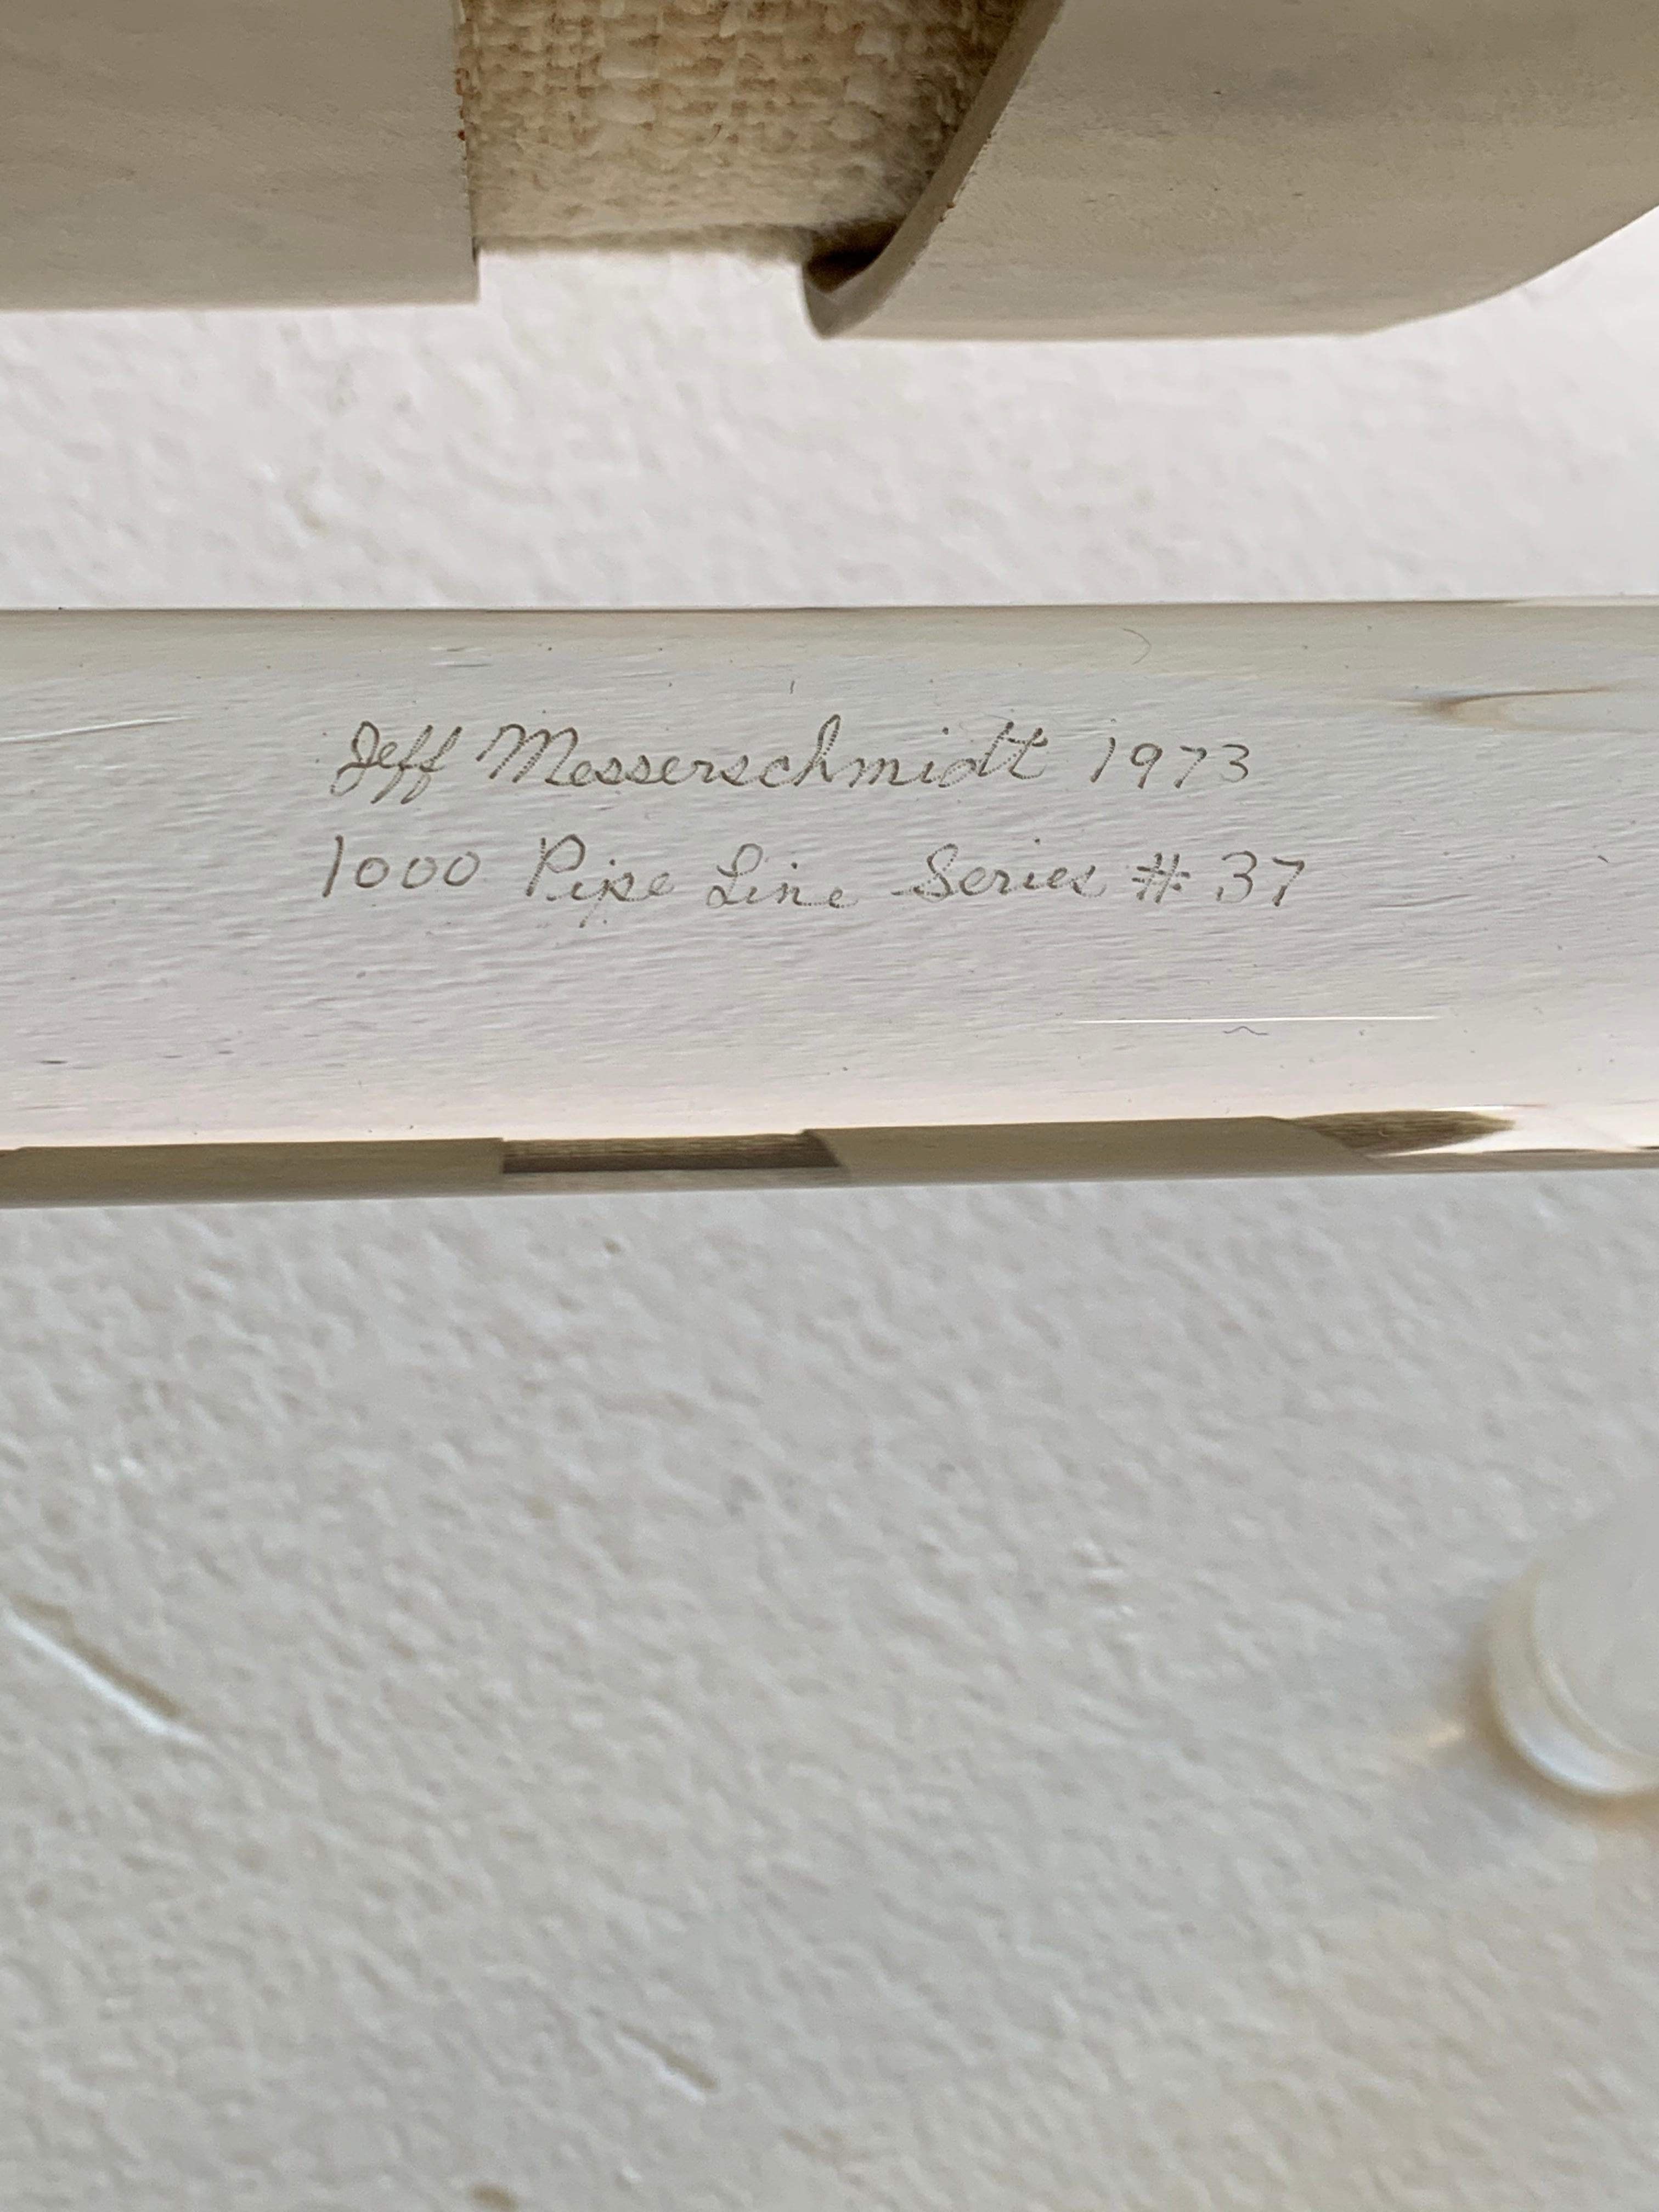 Jeff Messerschmidt Pipeline Chairs, 1973 For Sale 1